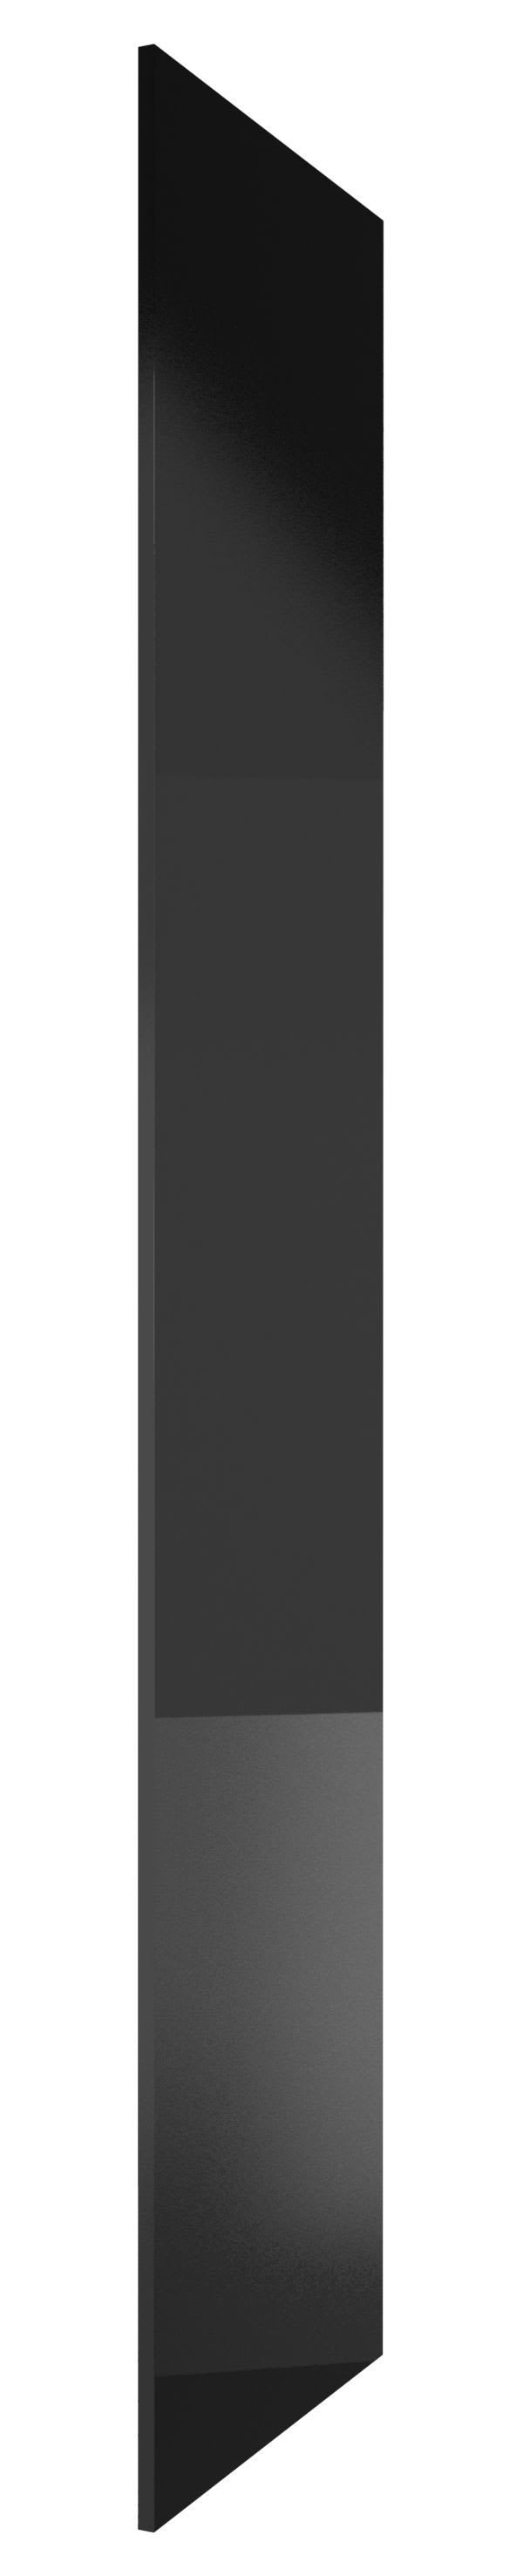 Wickes Orlando/Madison Dark Grey Gloss Decor Tall Panel